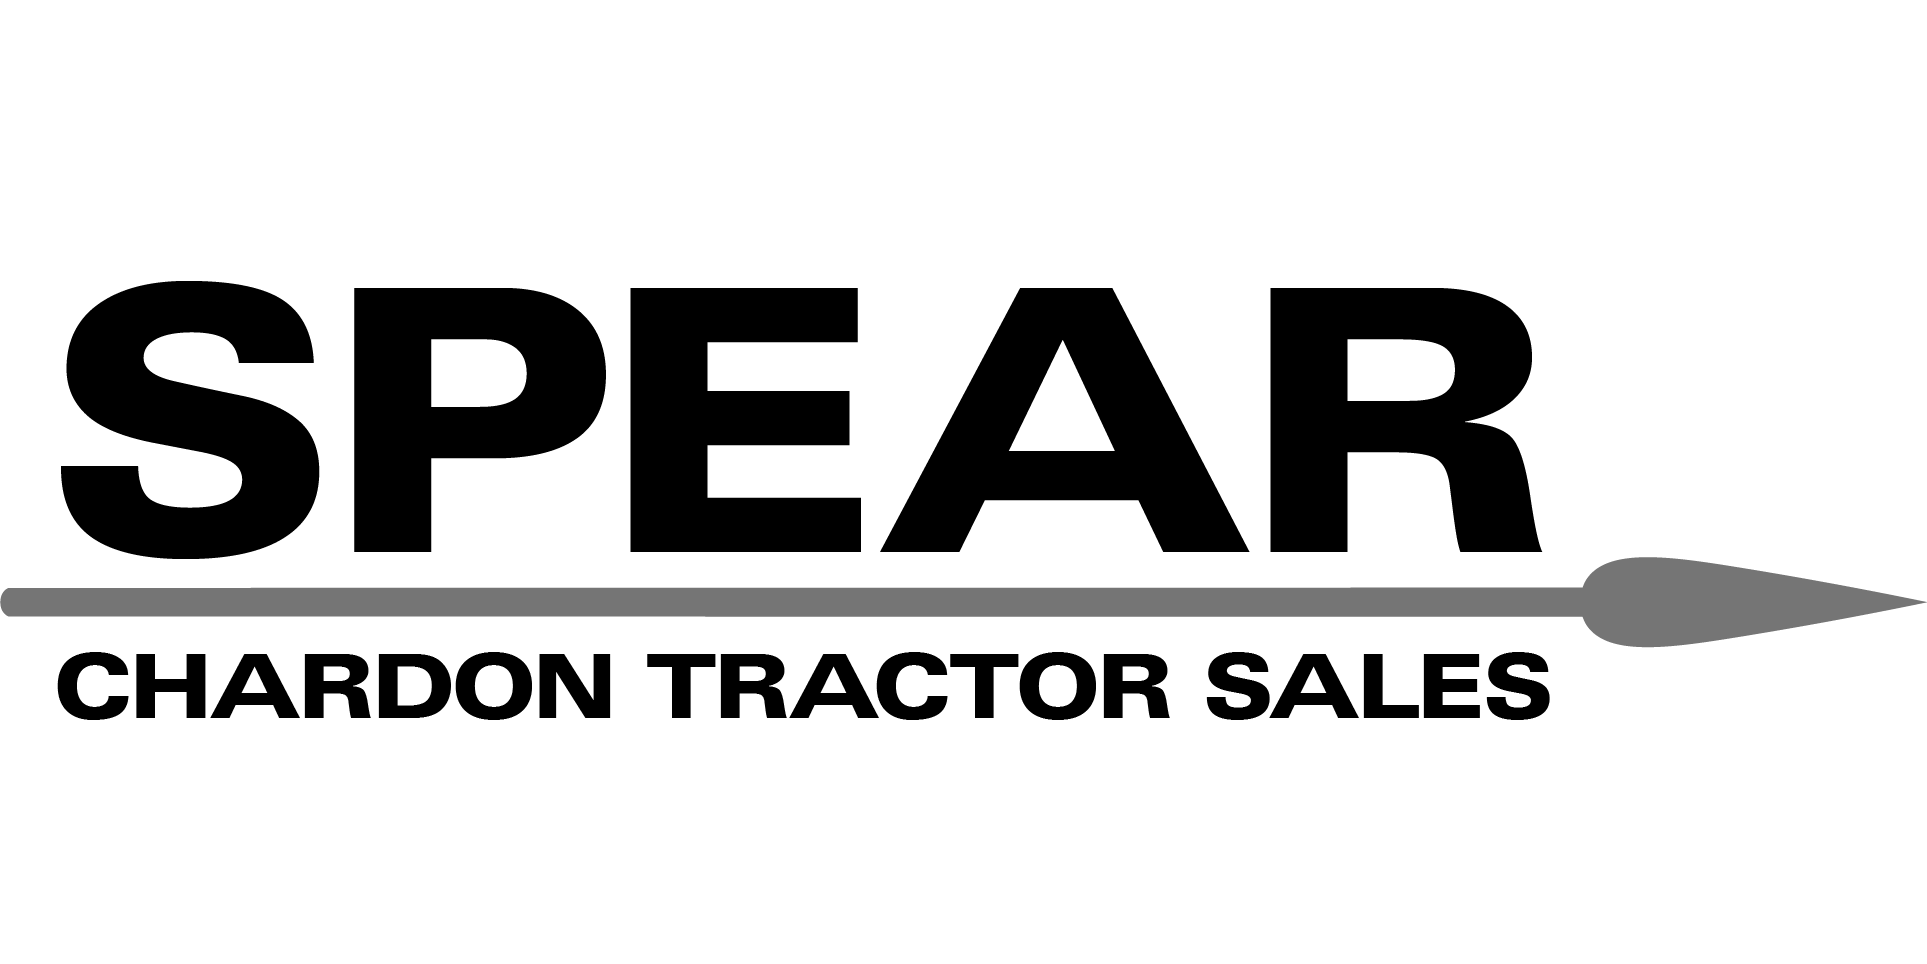 Chardon Logo - Spear Chardon Tractor Sales